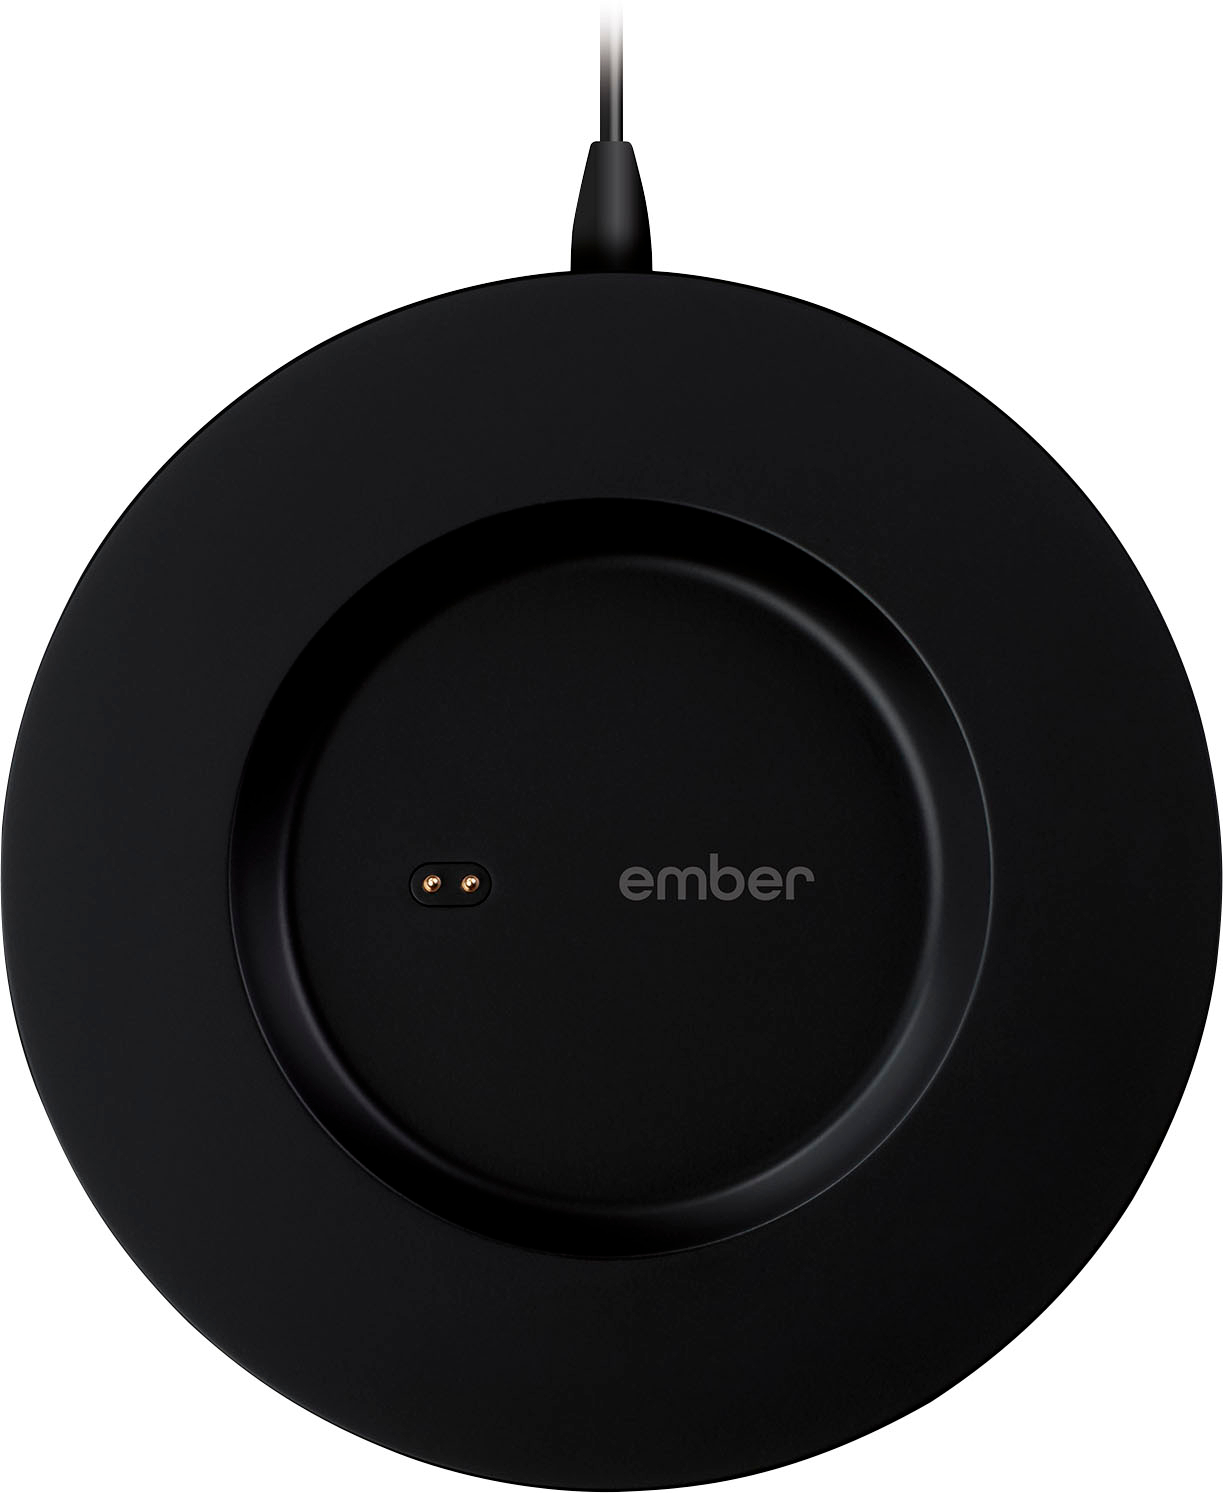 Ember - Mug² Charging Coaster - Black